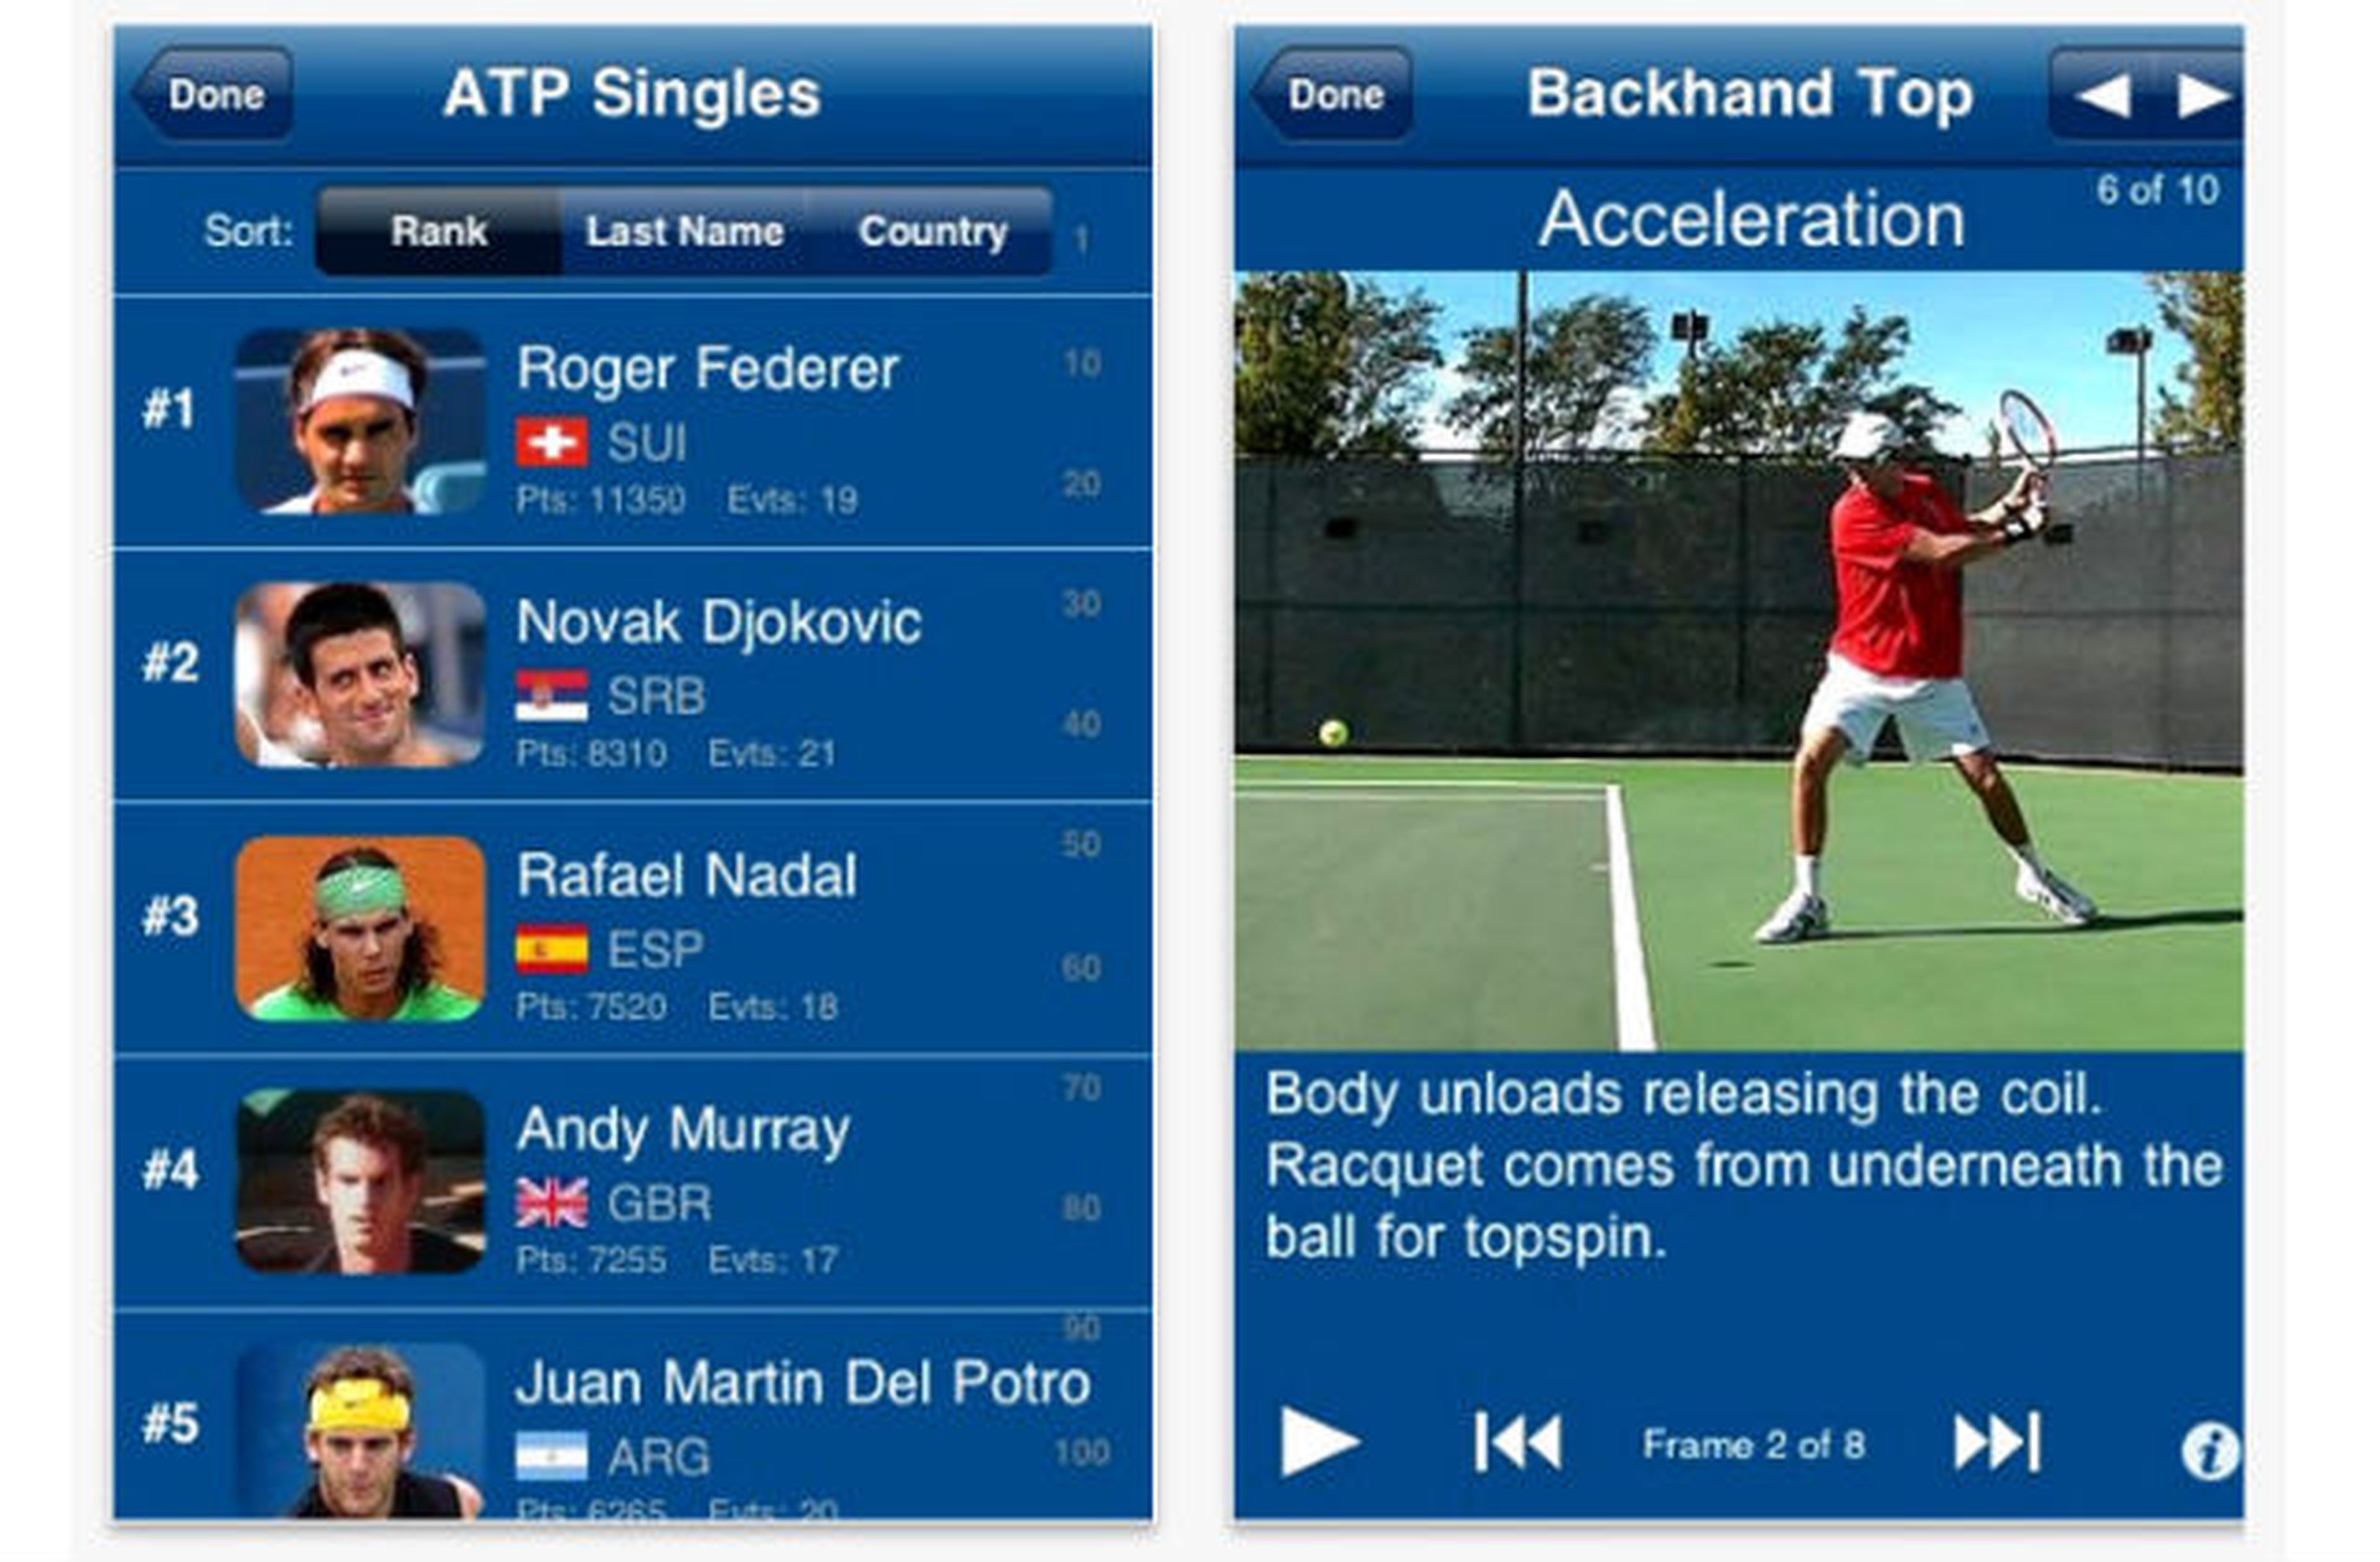 The Tennis App